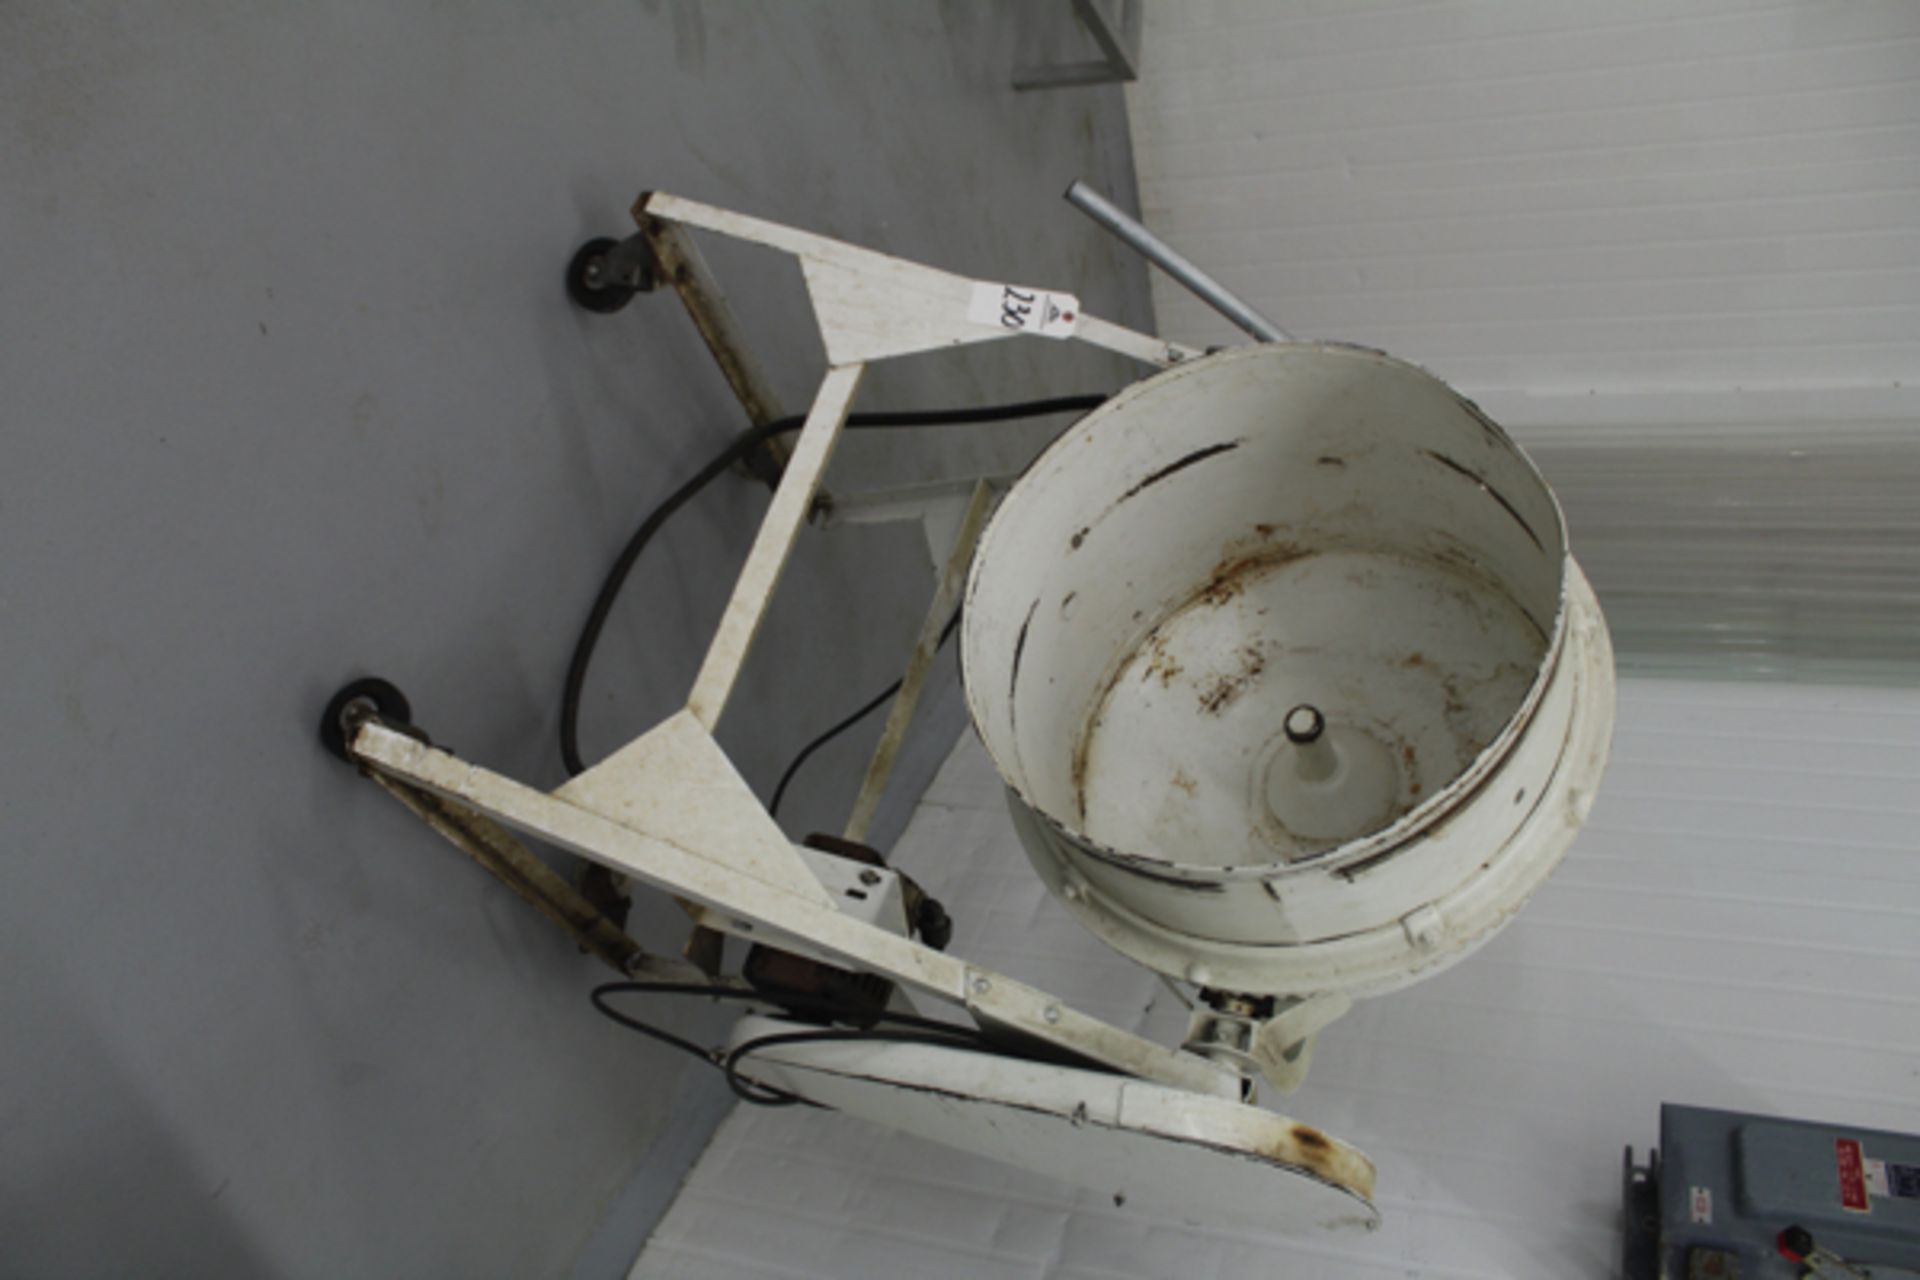 Manual Dump Pastry Mixer | Rigging Price: $25